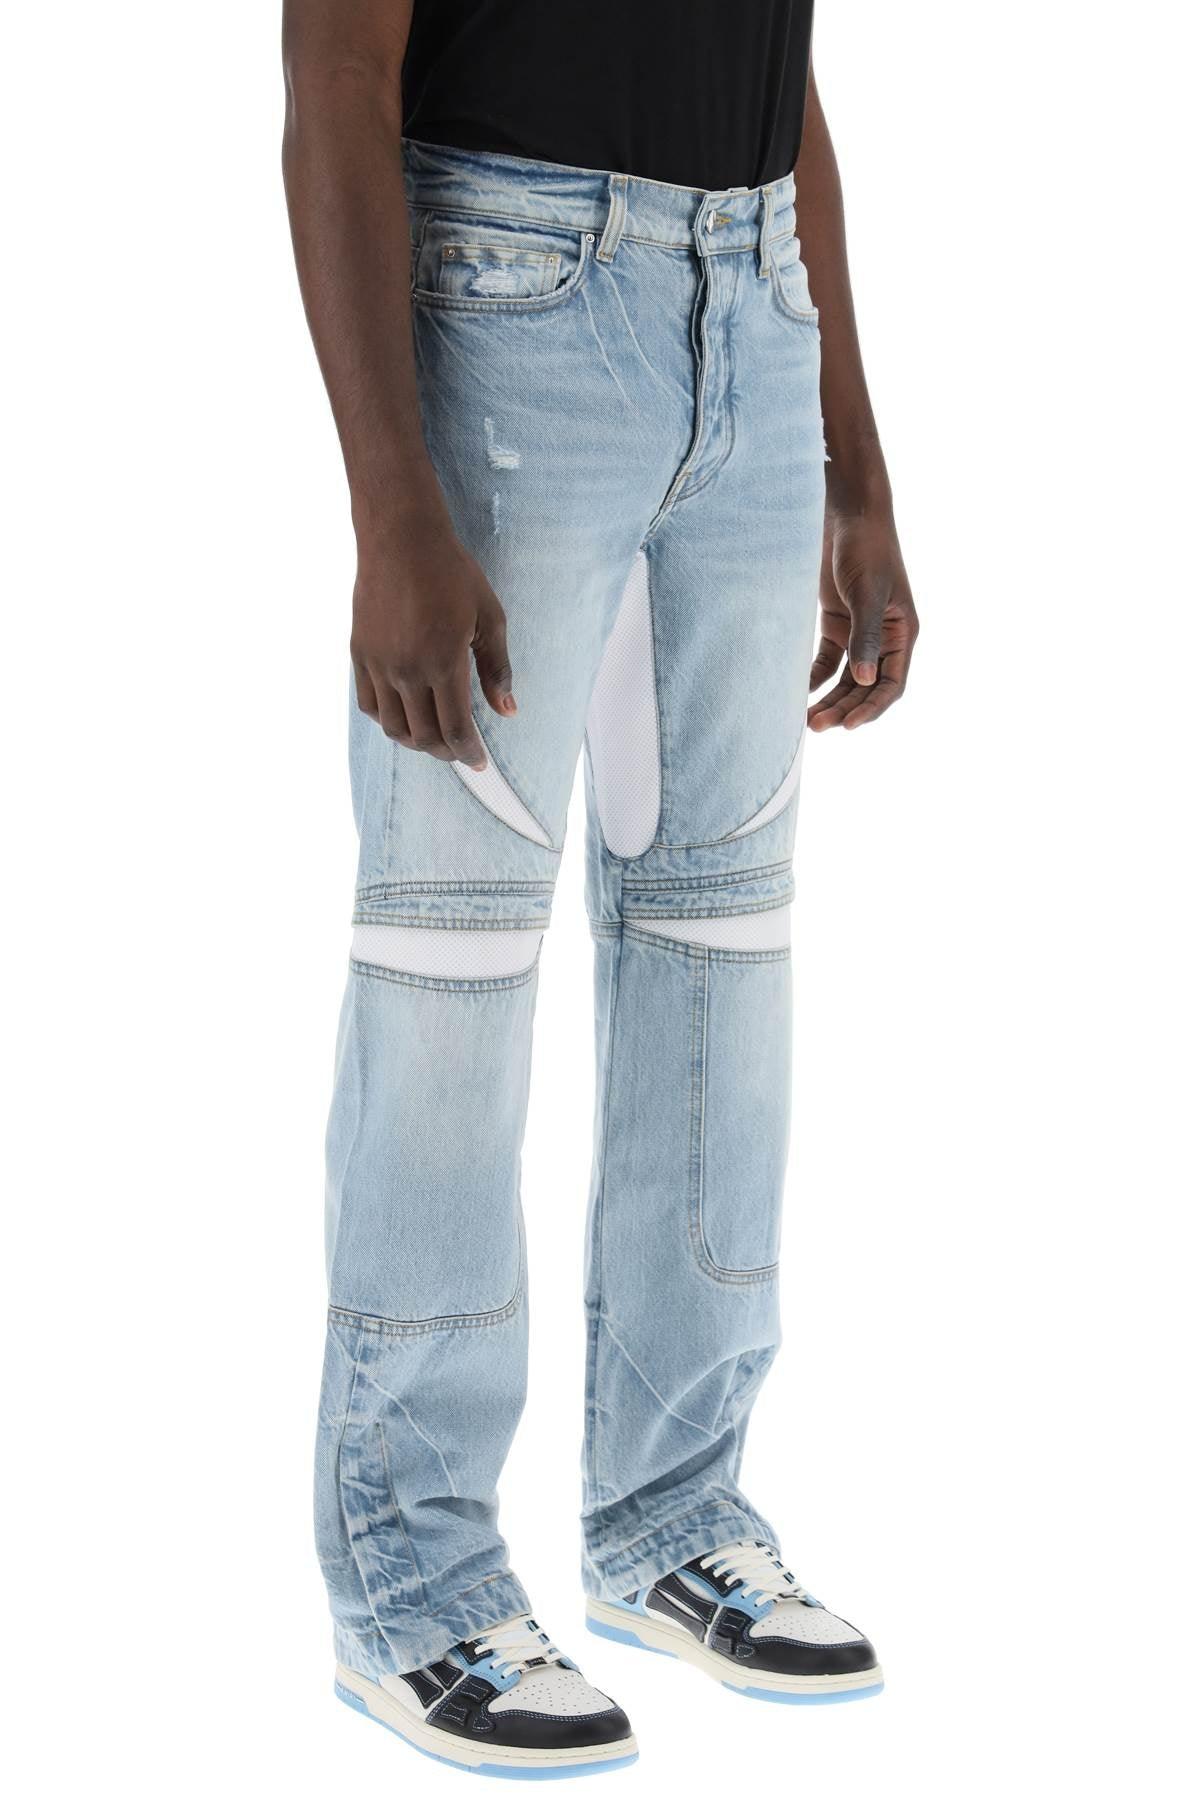 Amiri Mx 3 Jeans With Mesh Inserts - JOHN JULIA